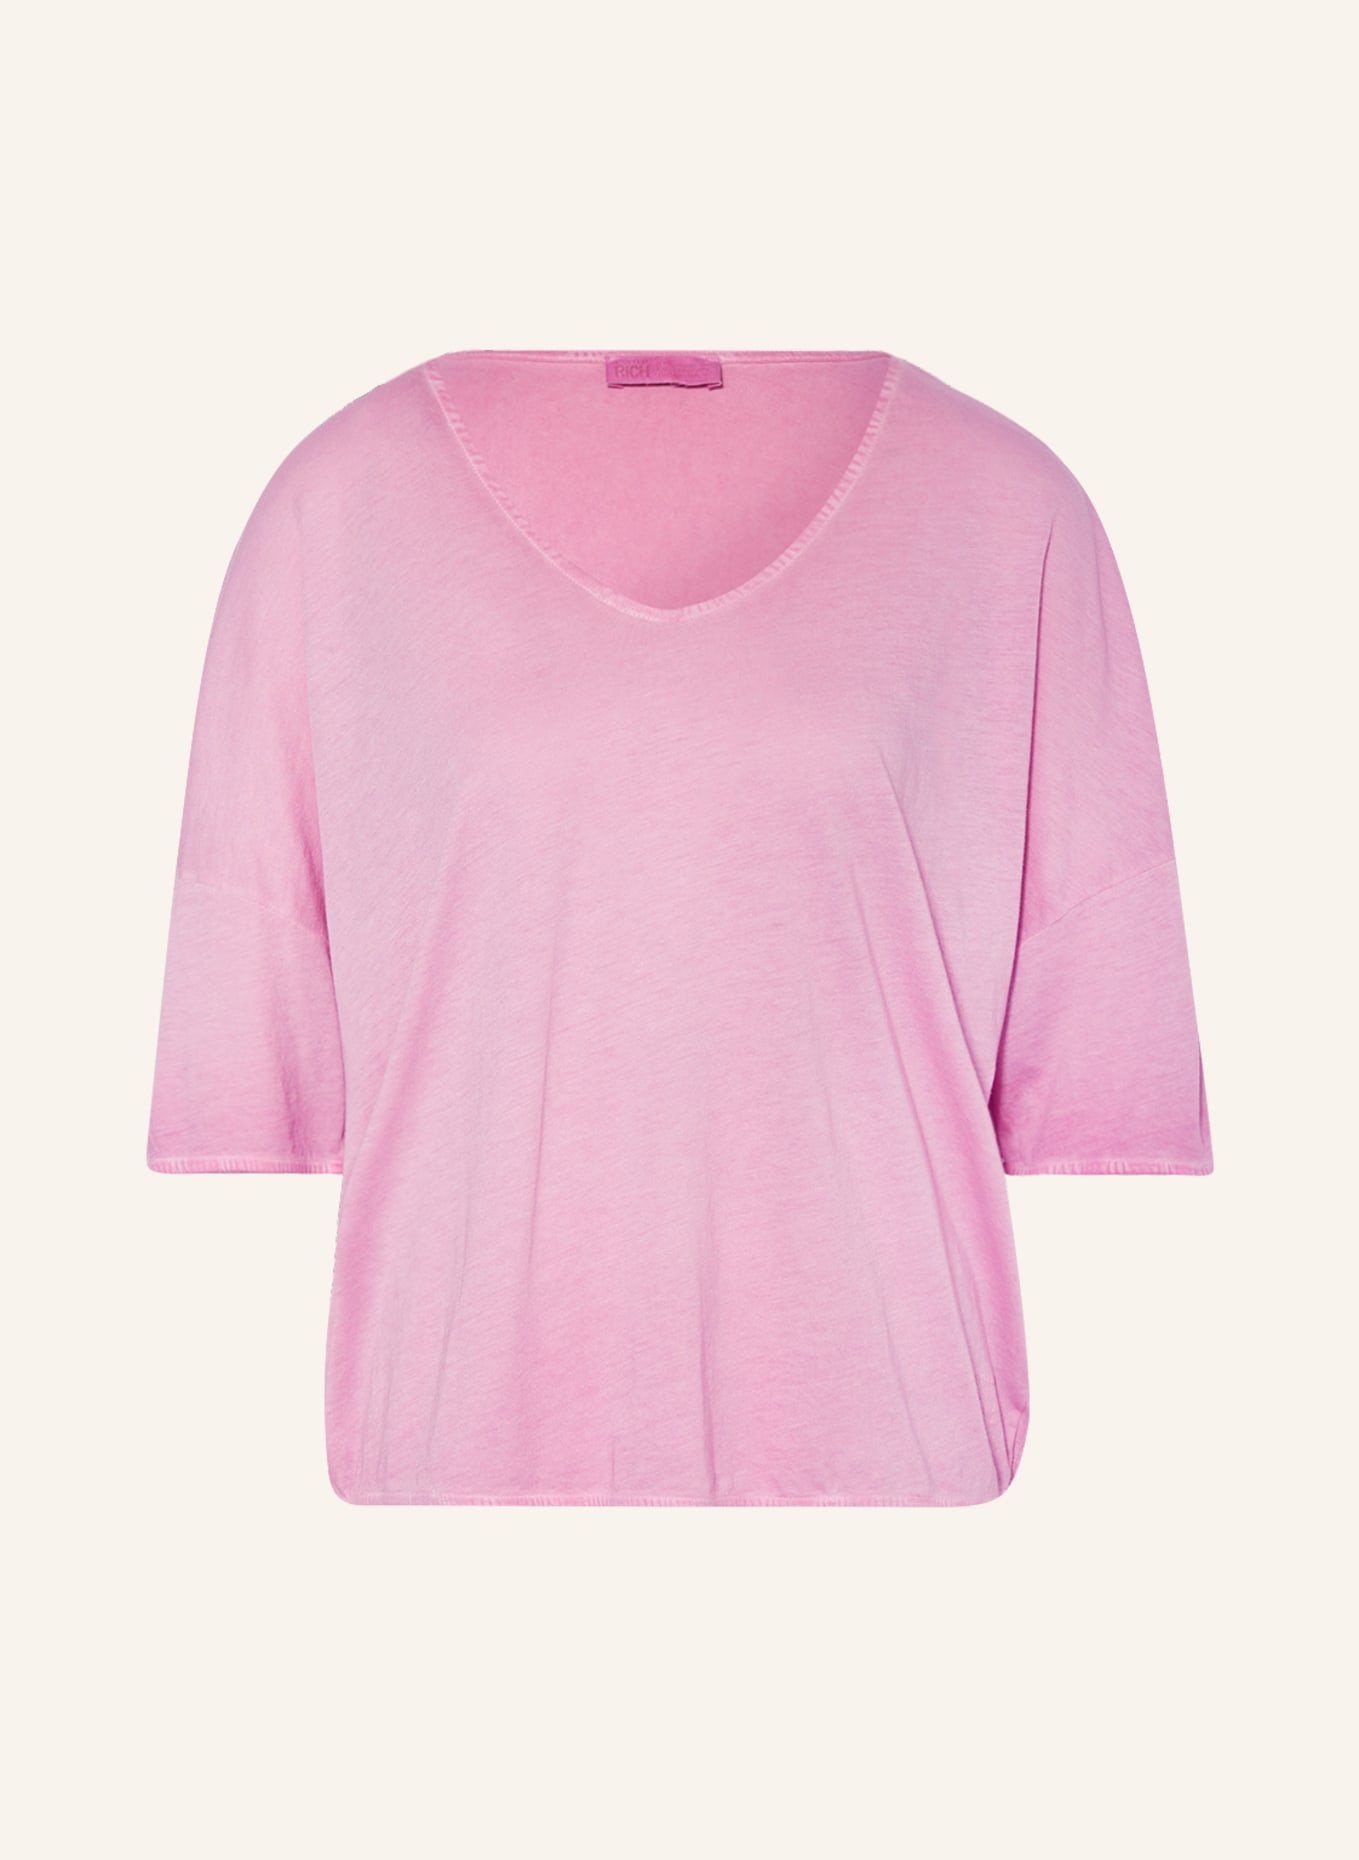 BETTER RICH Shirt mit 3/4-Arm, Farbe: ROSA (Bild 1)